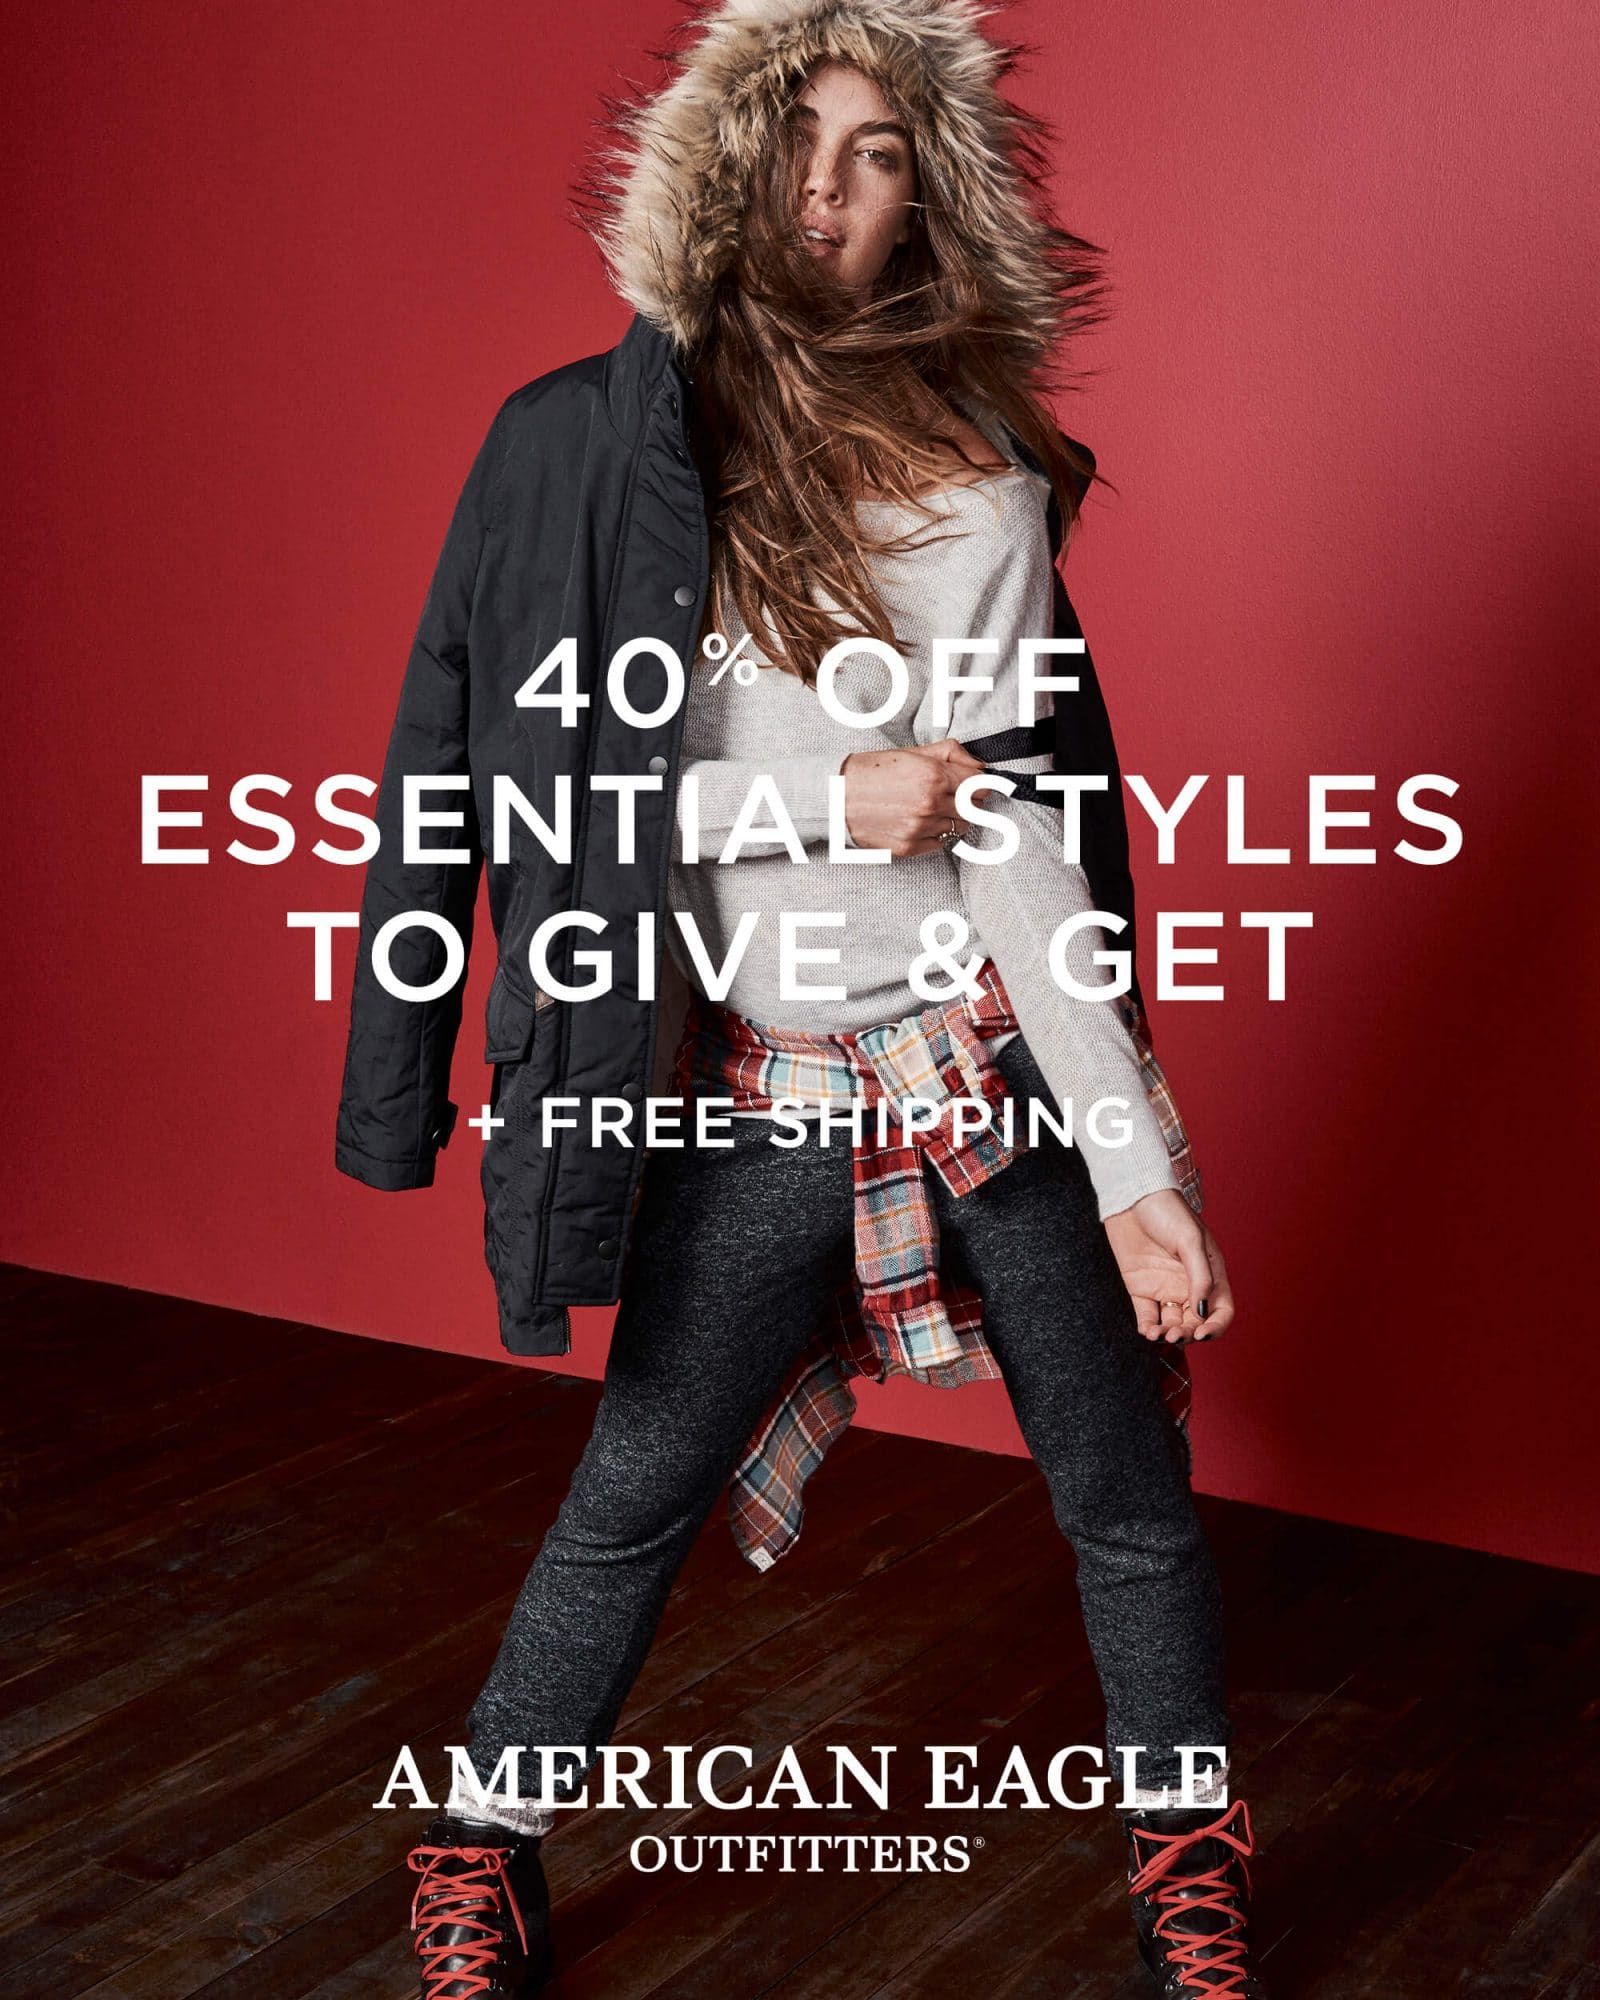 American Eagle Black Friday 2016 deals